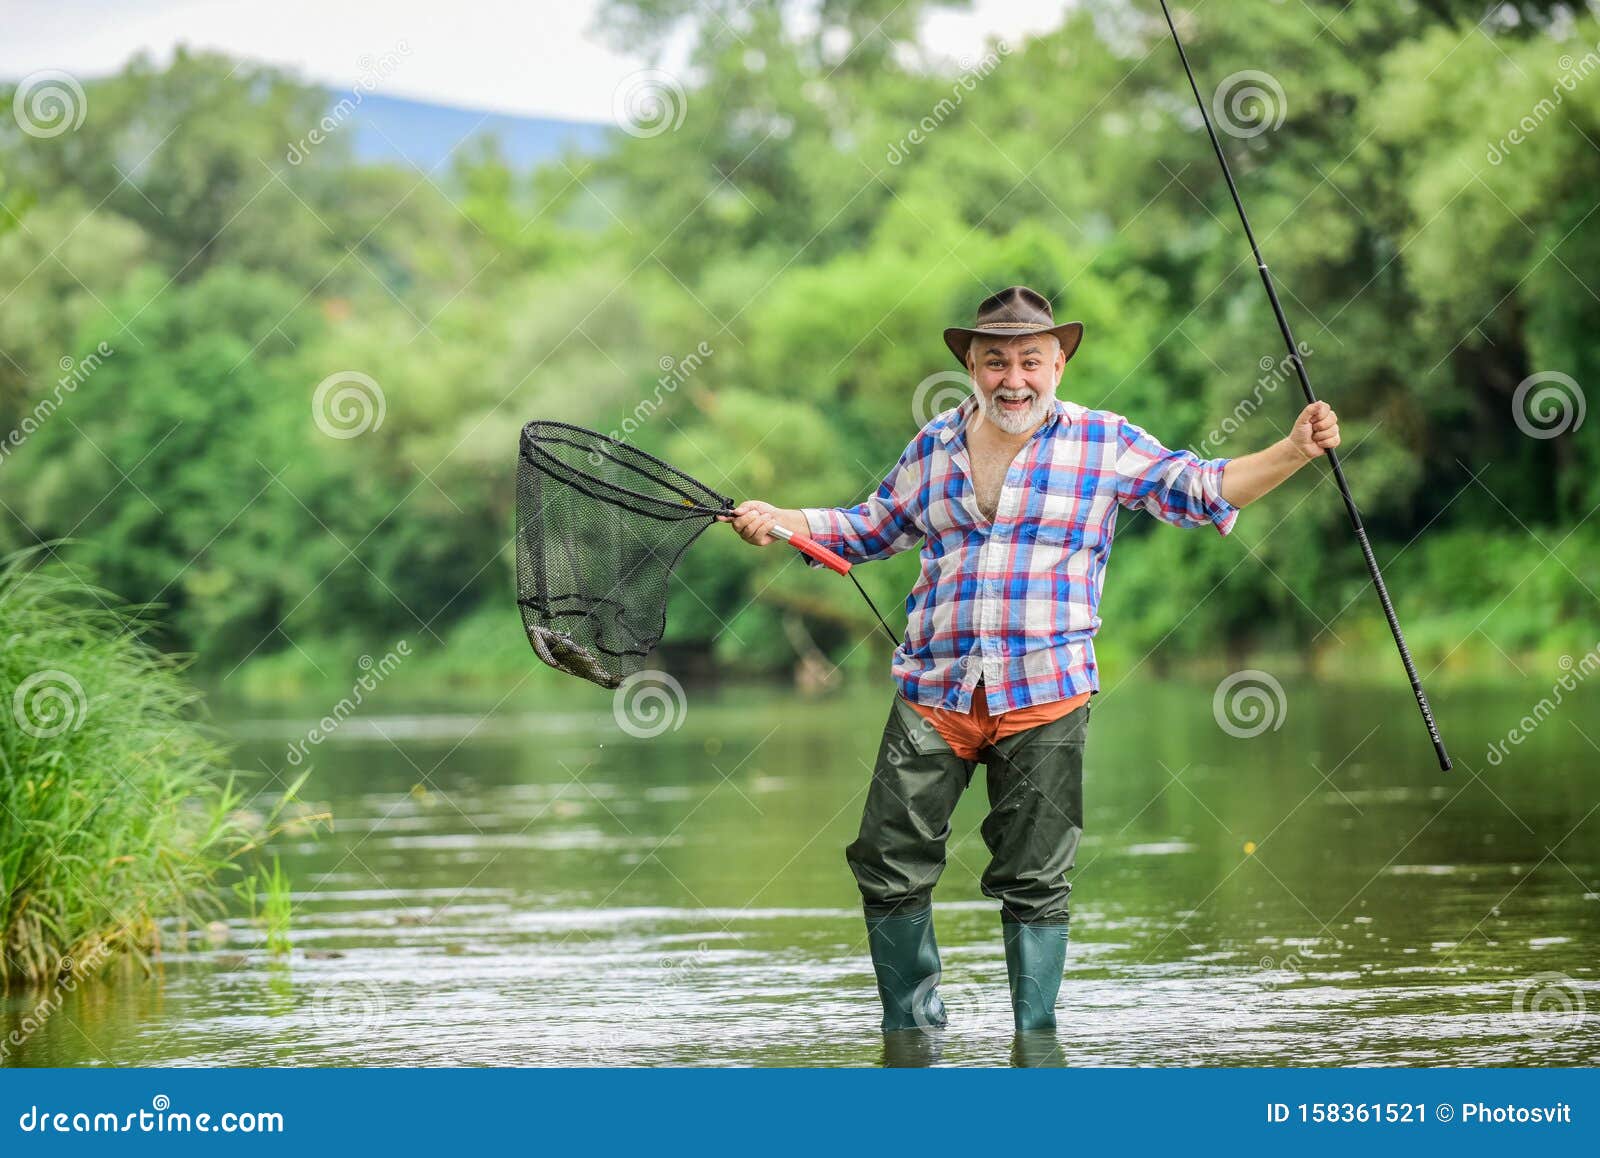 Fisherman with Fishing Rod. Activity and Hobby. Fishing Freshwater